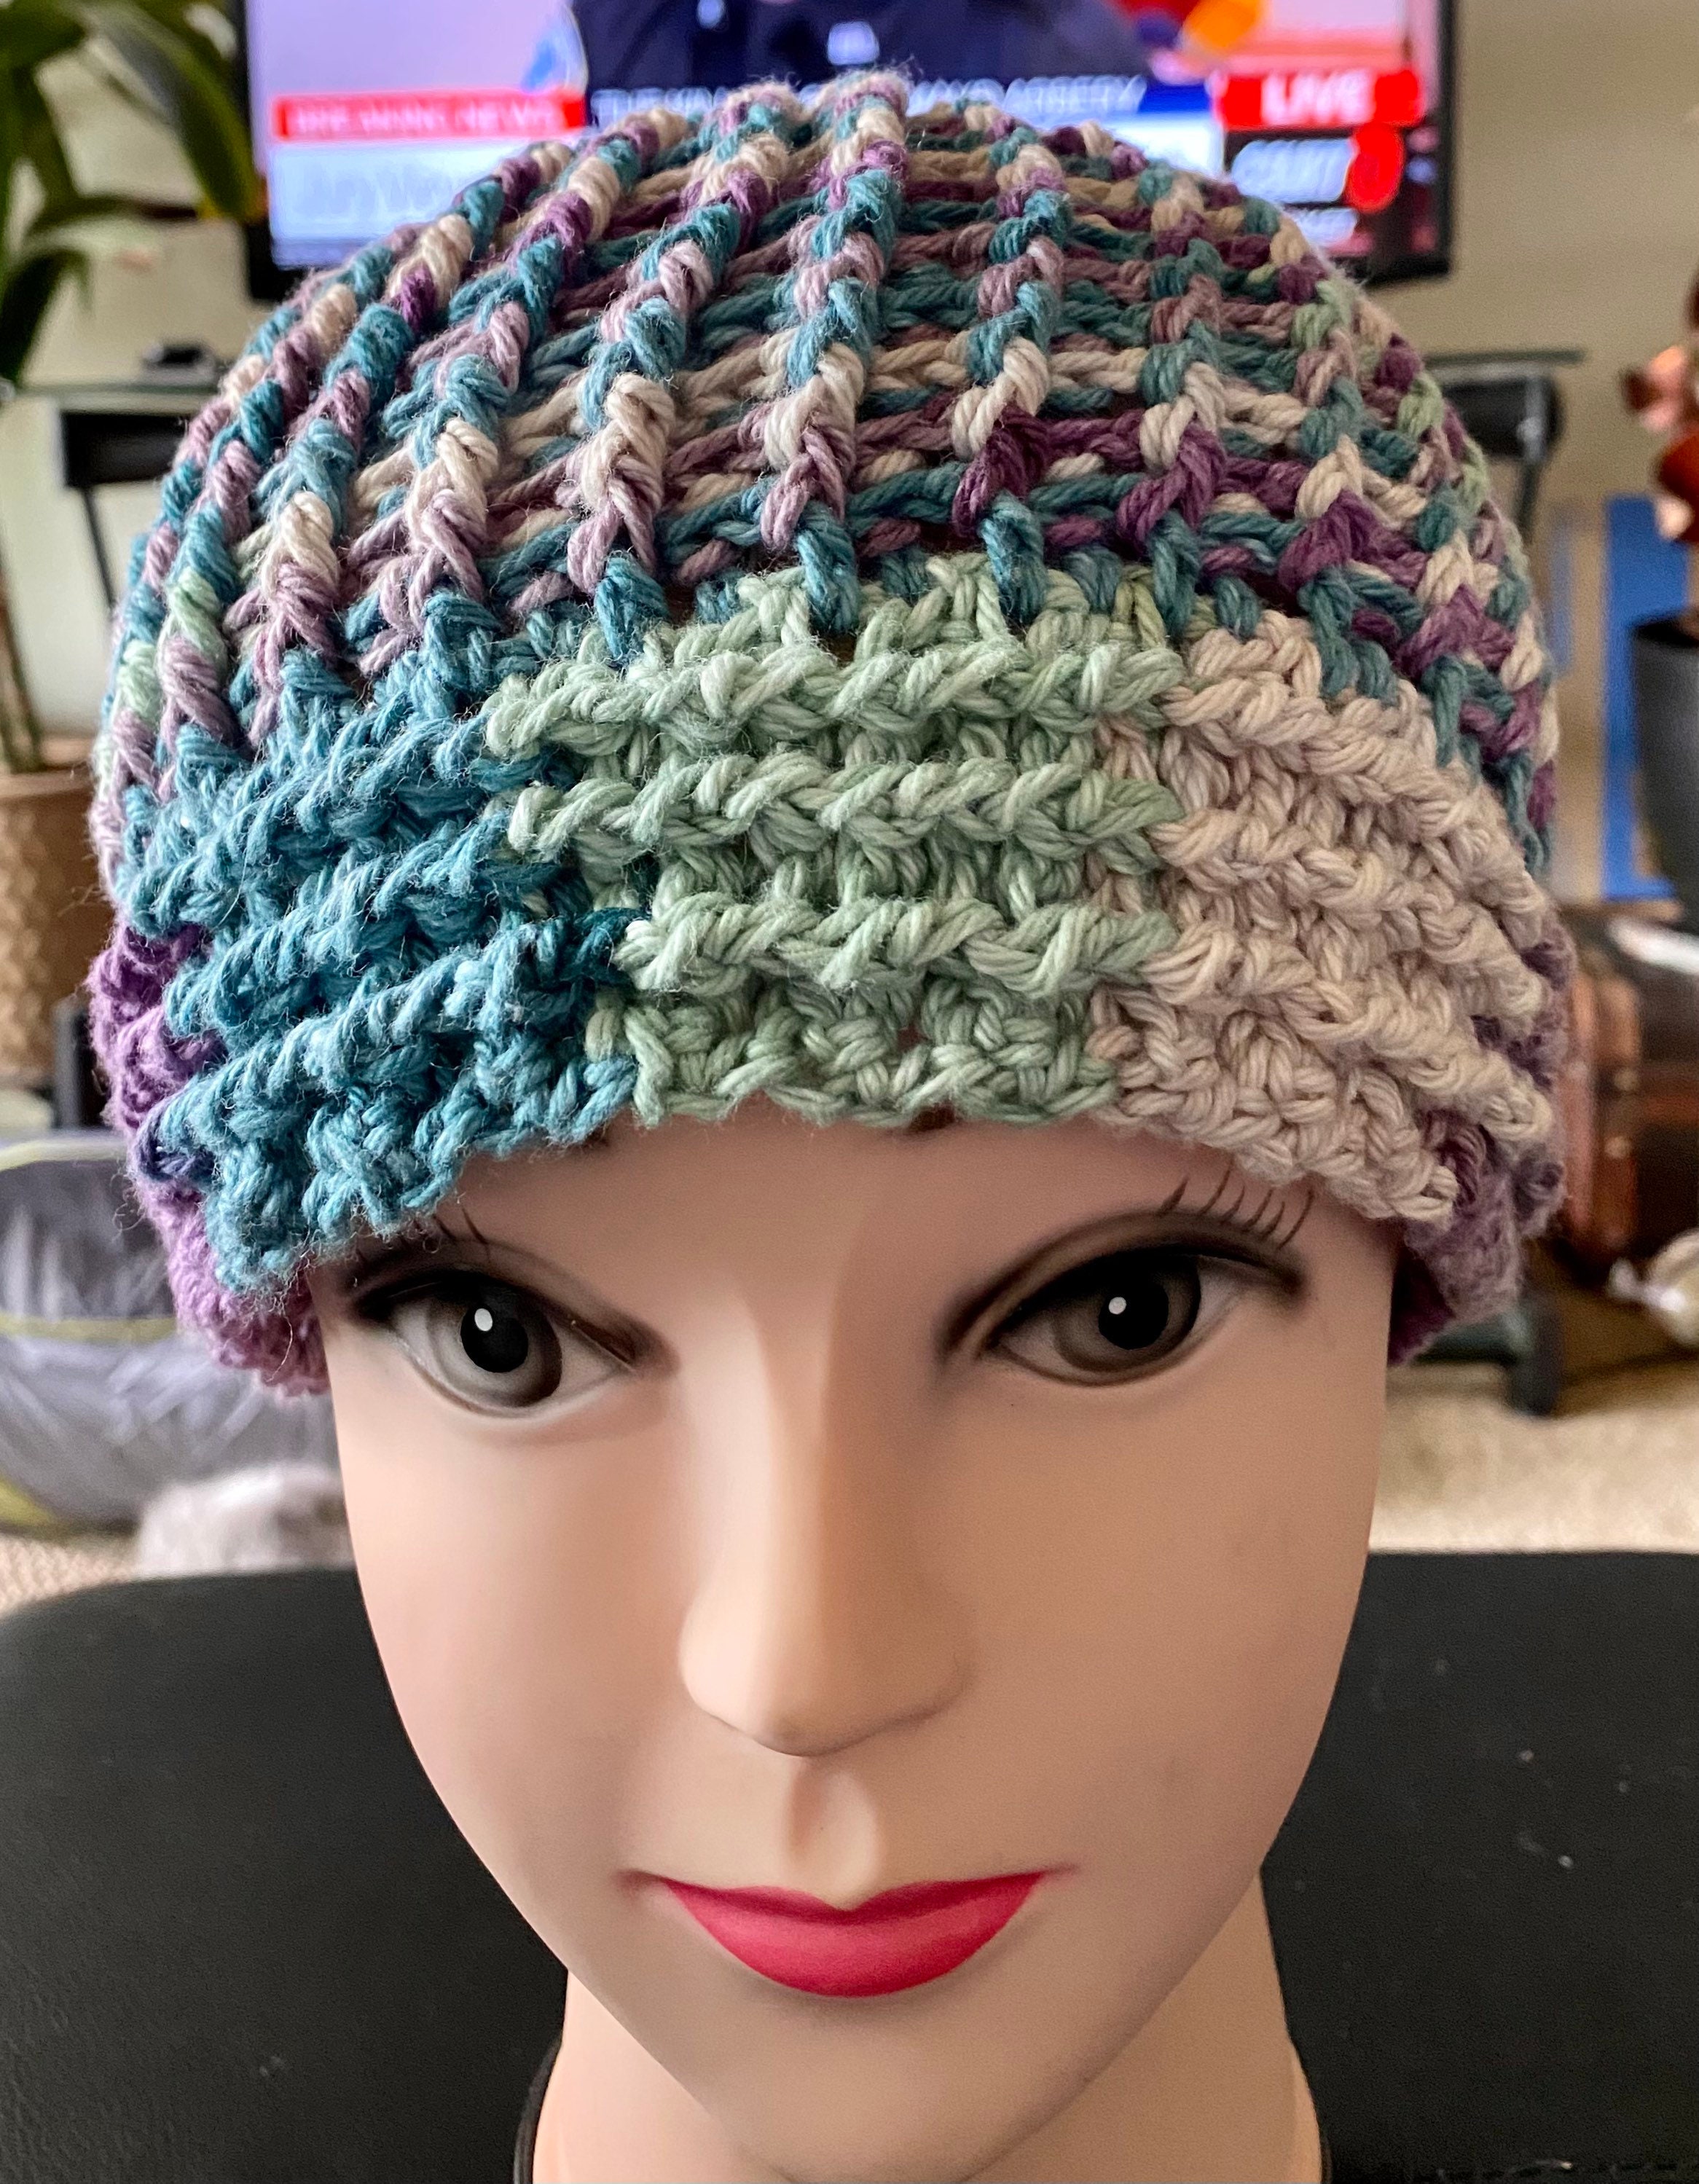 Hand crochet cotton hat